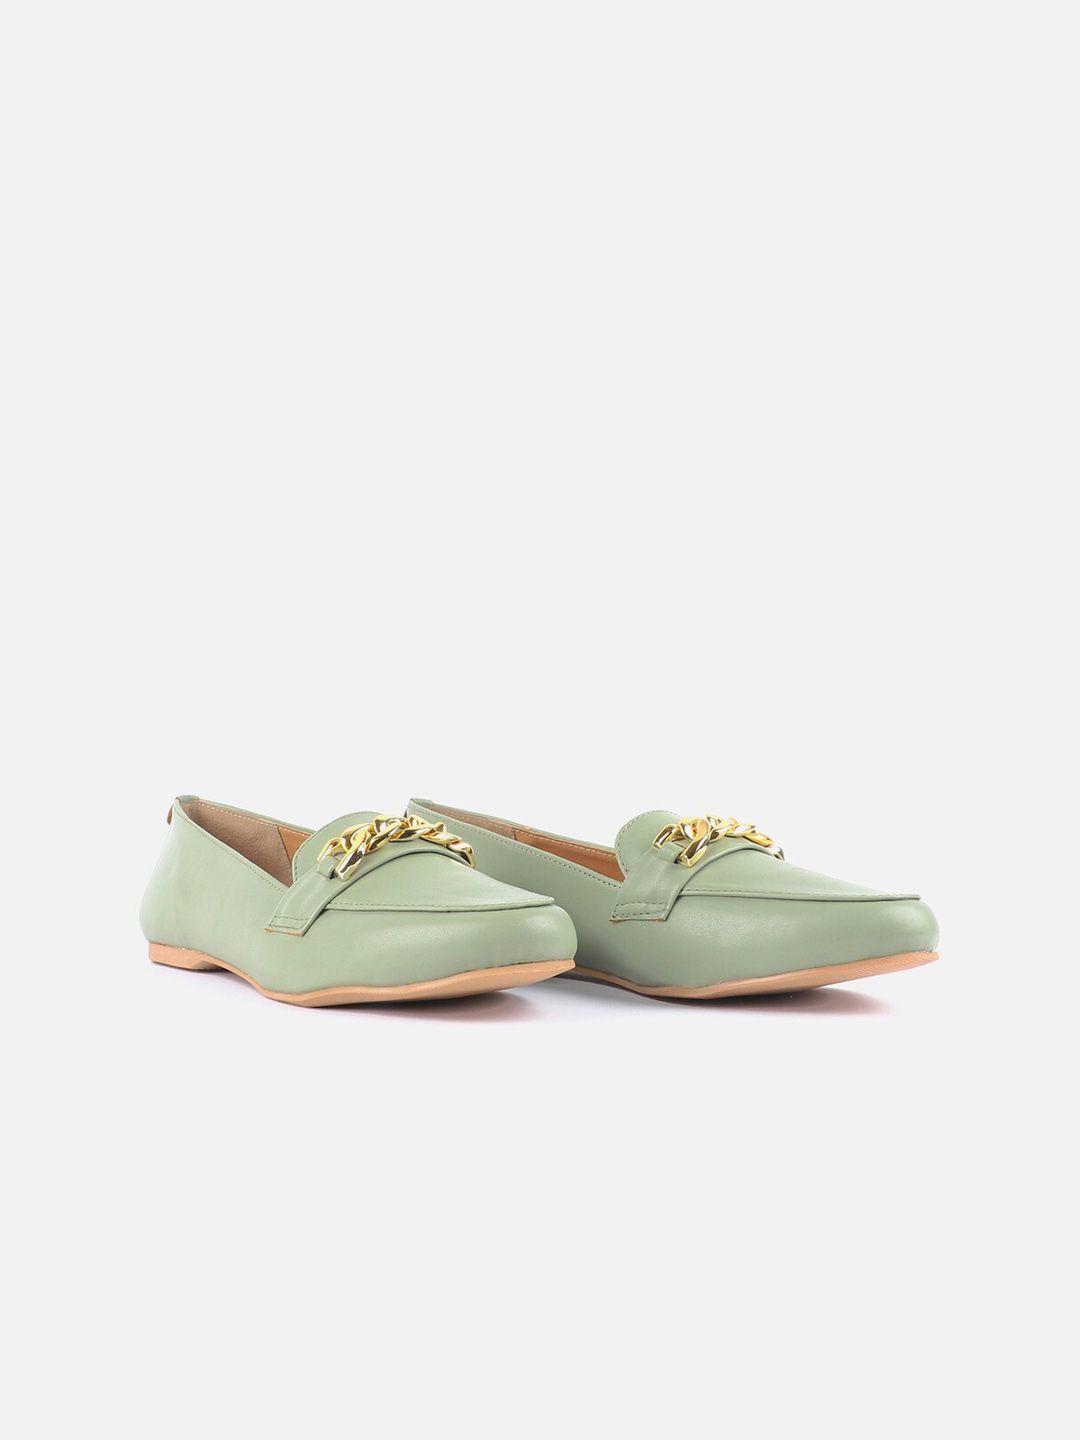 carlton-london-women-embellished-slip-on-loafers